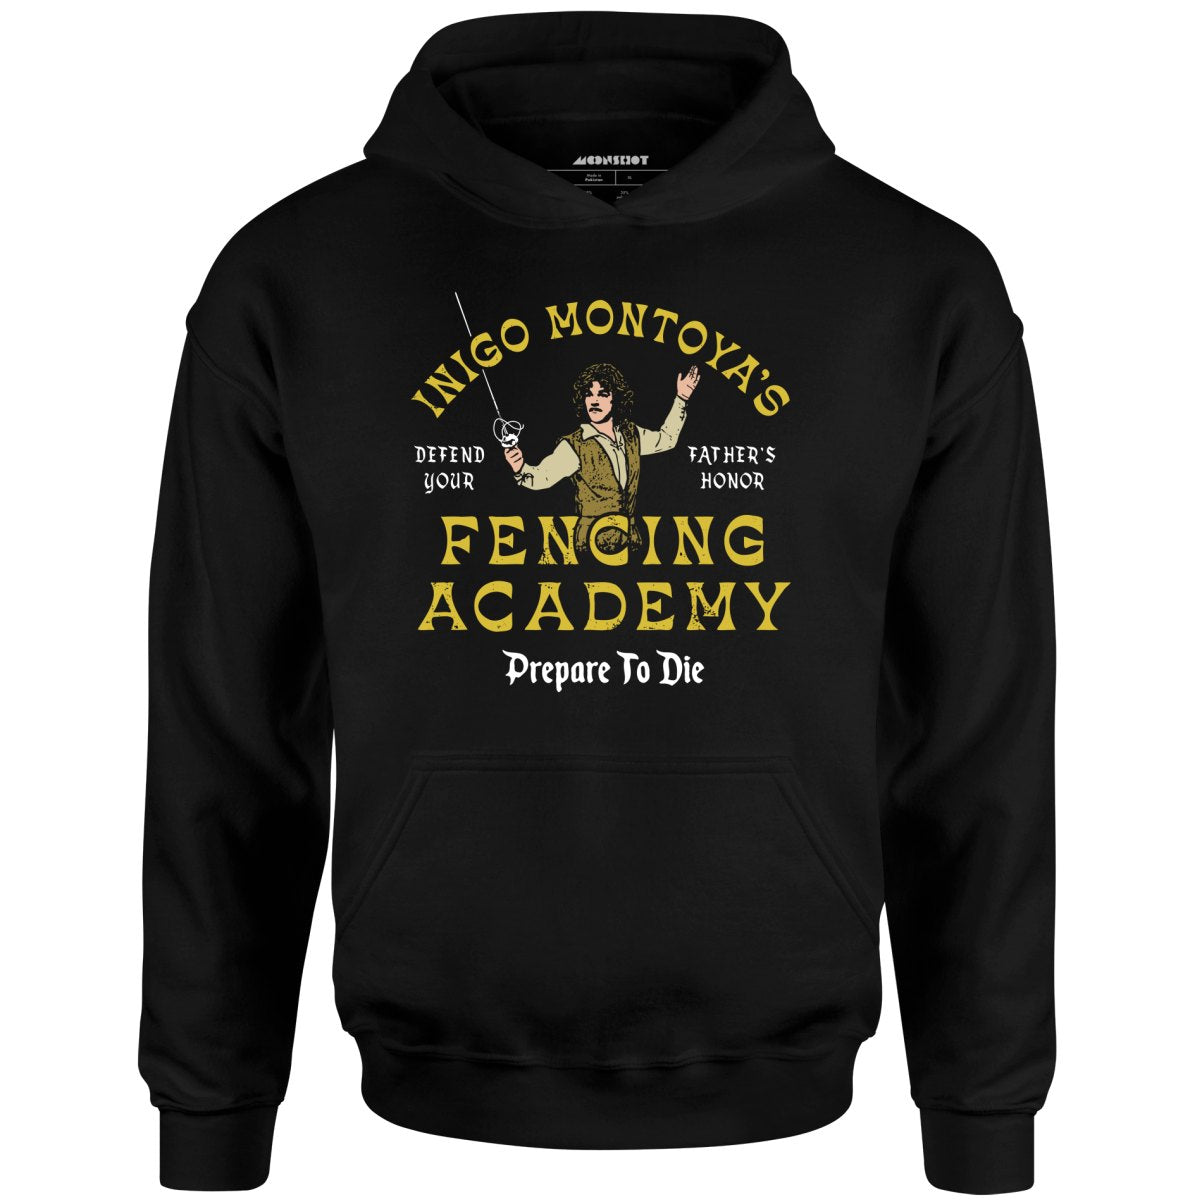 Inigo Montoya's Fencing Academy - Unisex Hoodie